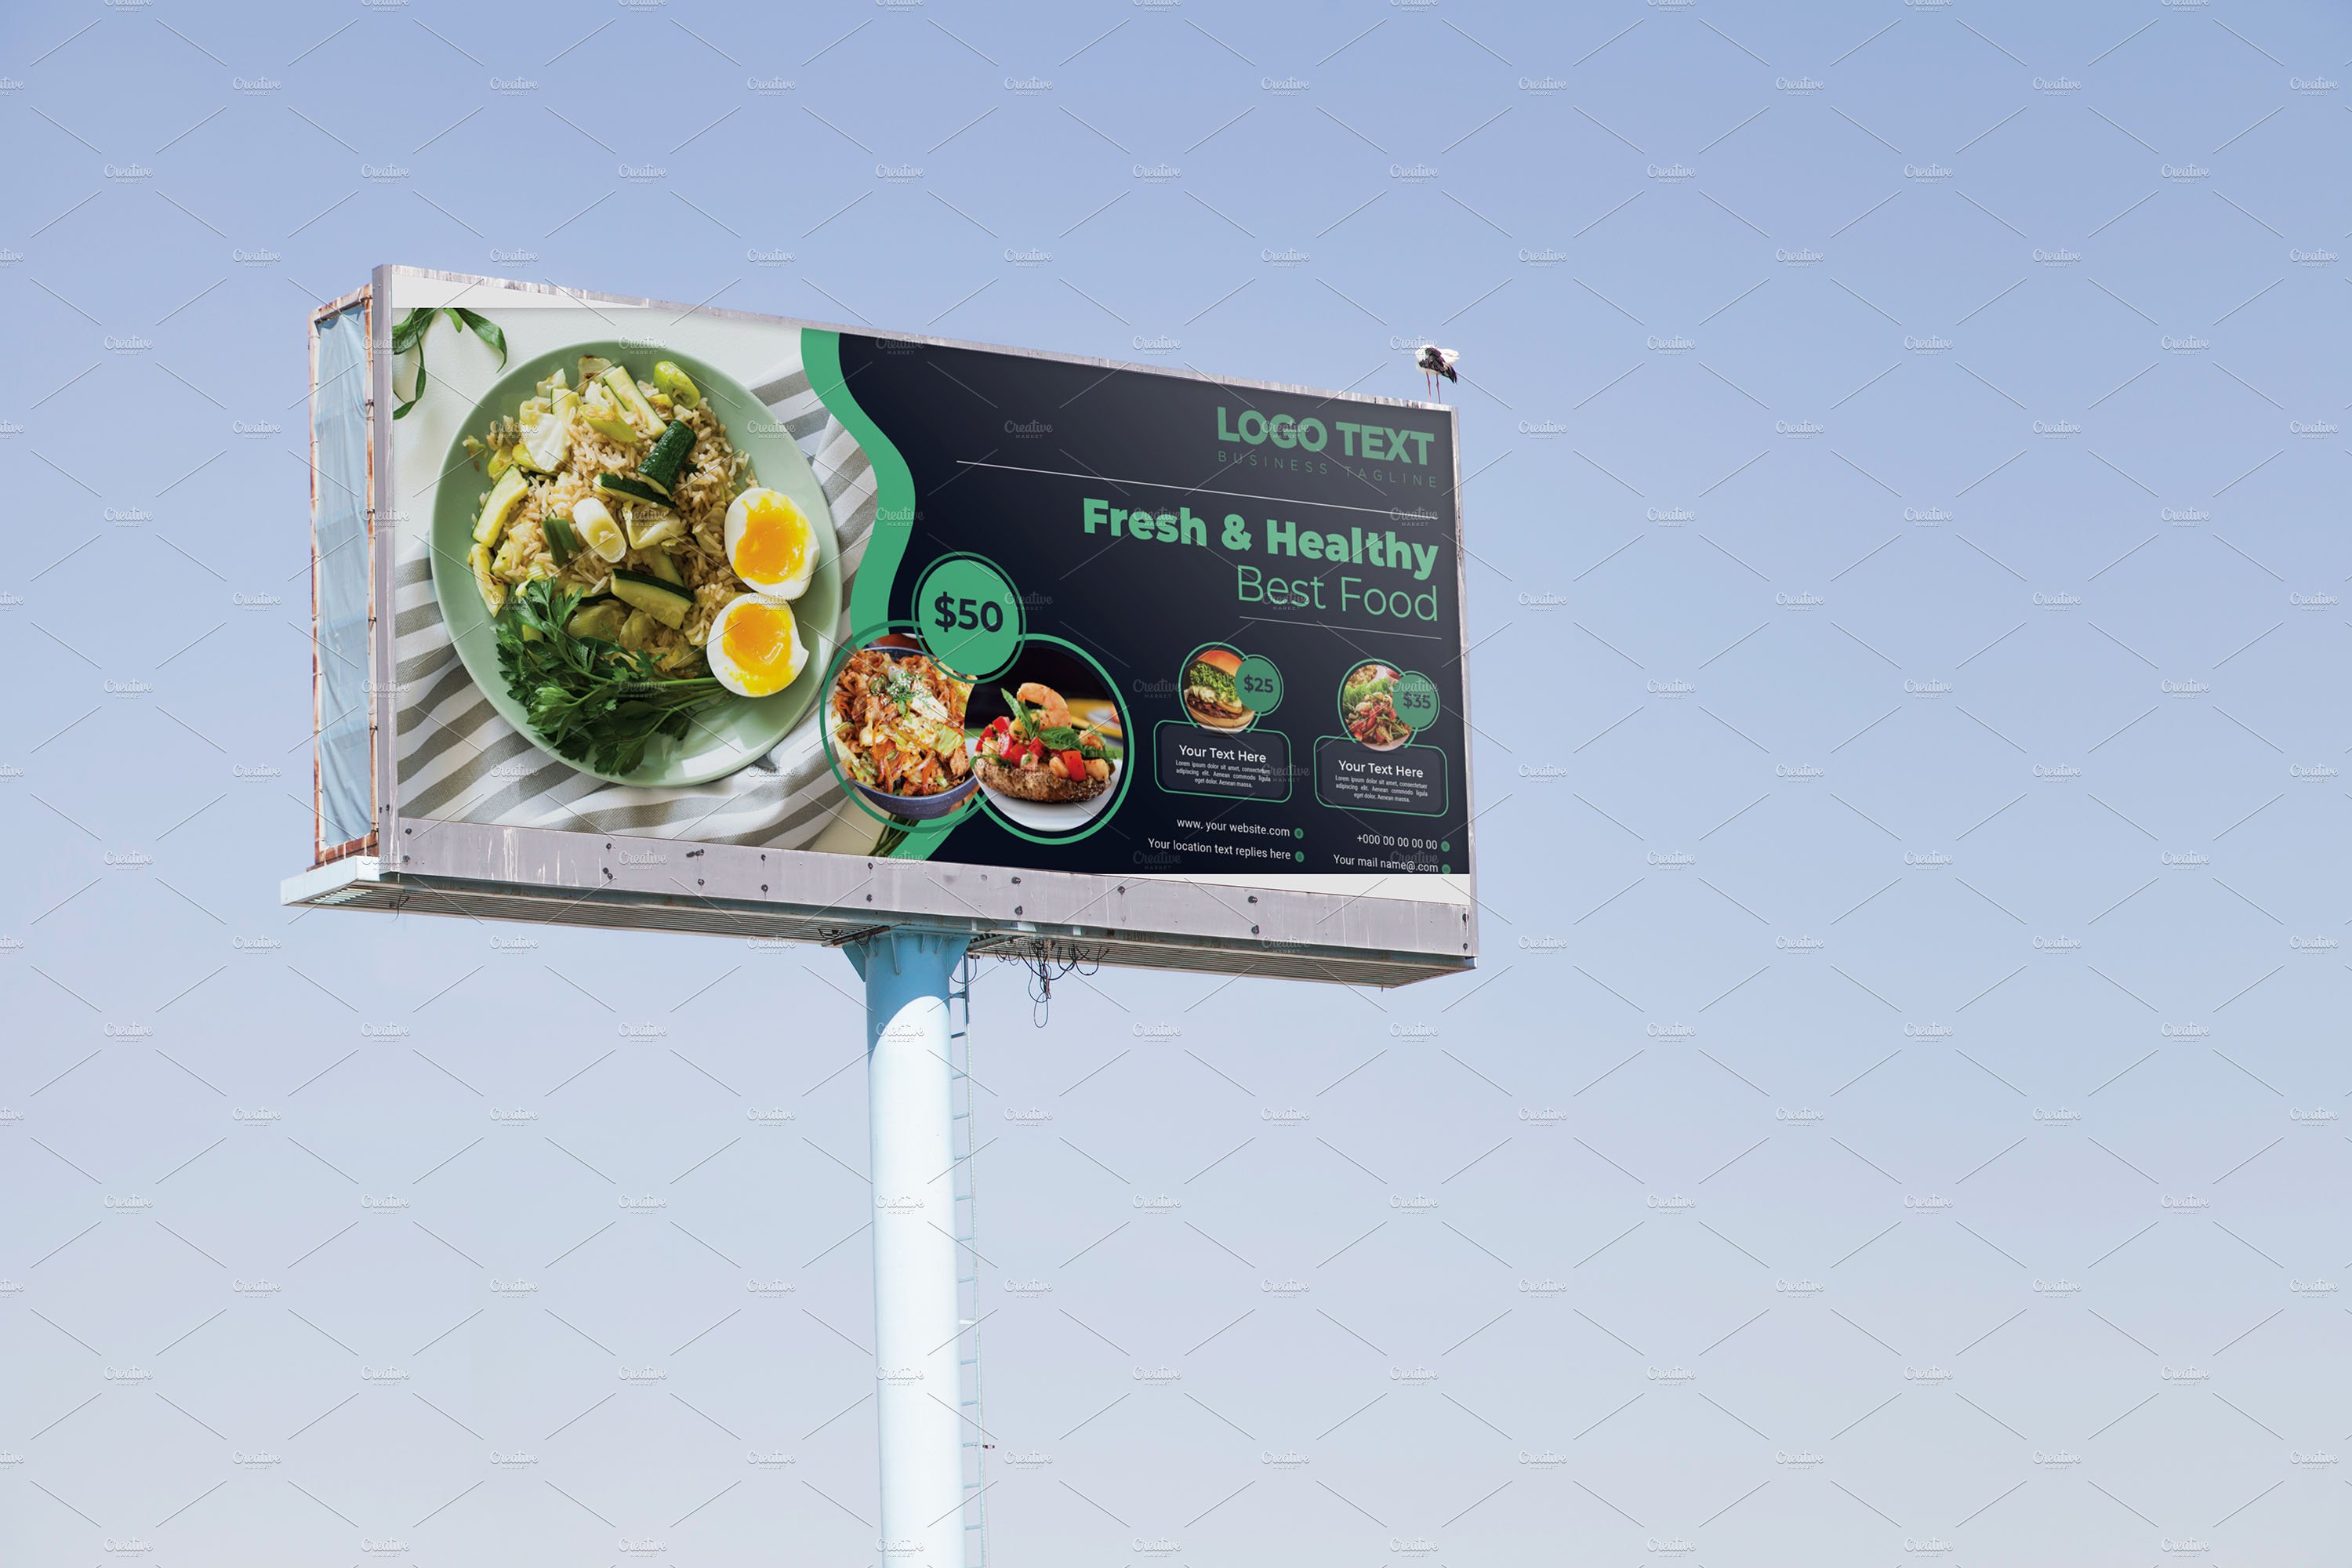 Restaurant Billboard Fast Food preview image.